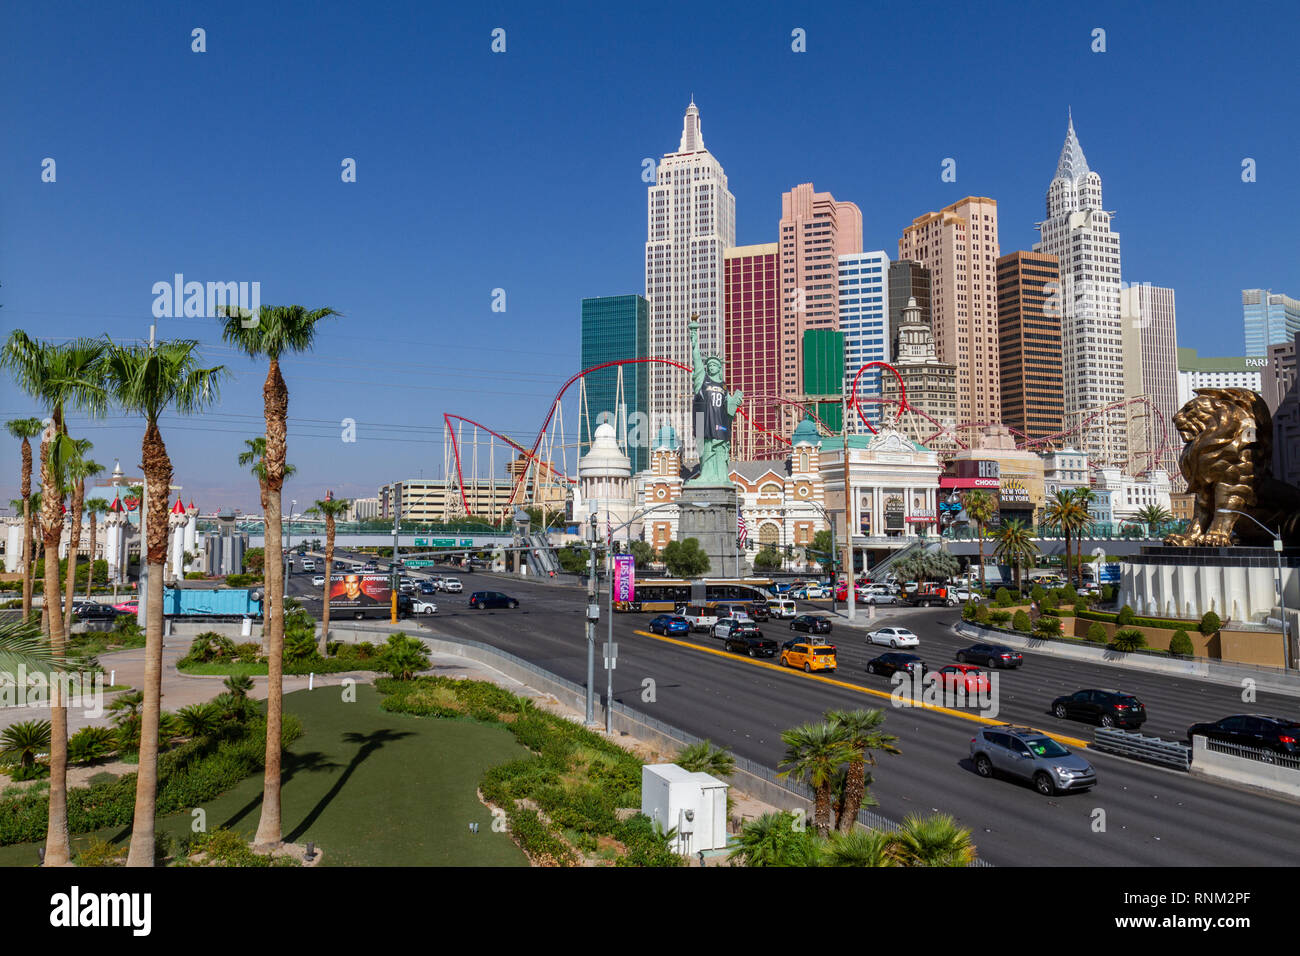 The New York-New York Hotel & Casino viewed across E Tropicana Avenue, Las Vegas (City of Las Vegas), Nevada, United States. Stock Photo